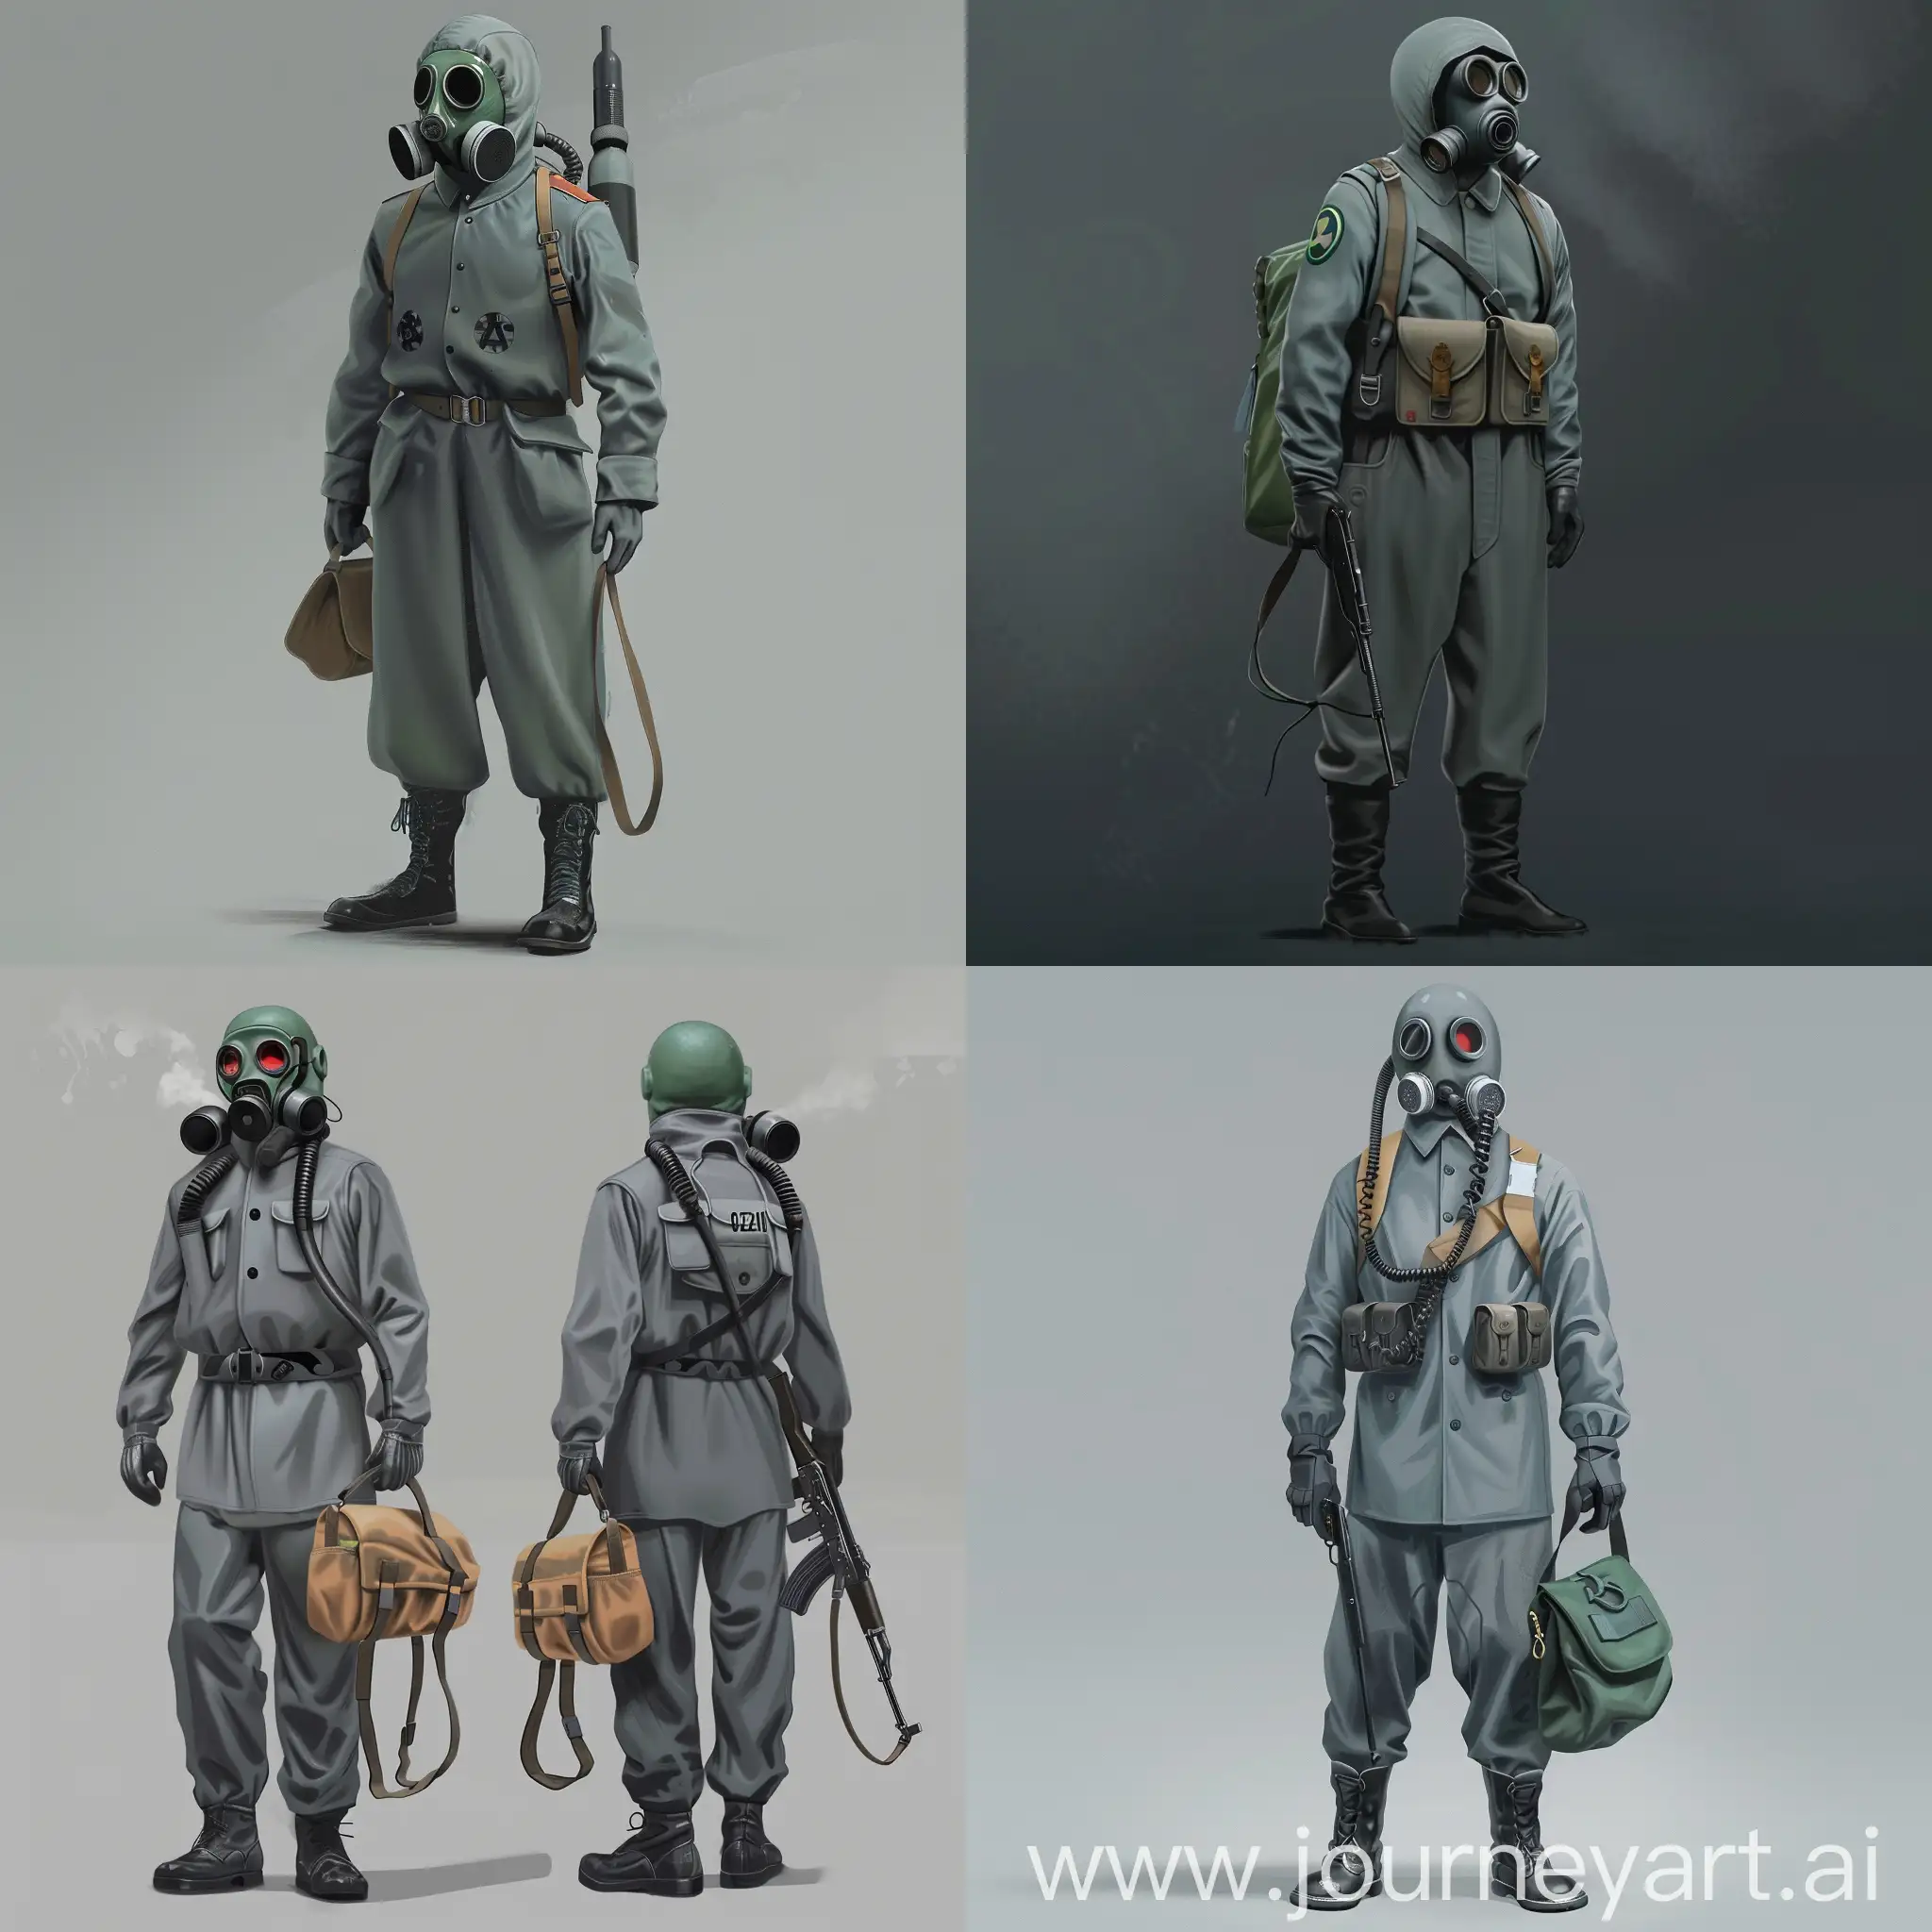 Concept art character, OZK gray hazmat soviet suit, gasmask, weapon on the hands, Shoulder Bag, military vest on body.